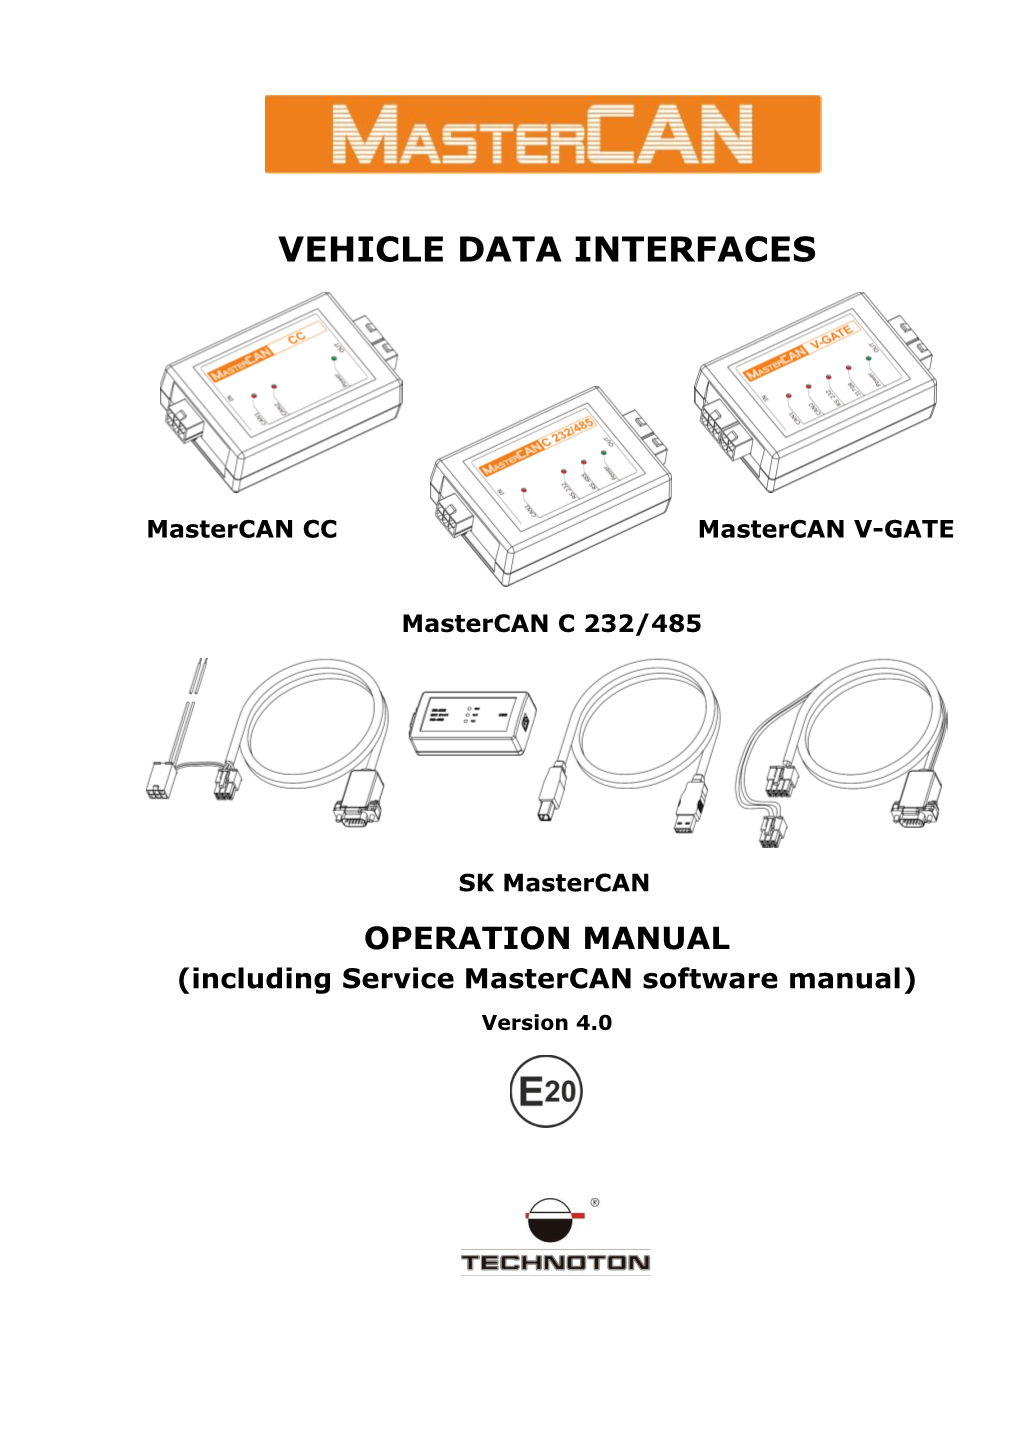 Mastercan Vehicle Data Interfaces